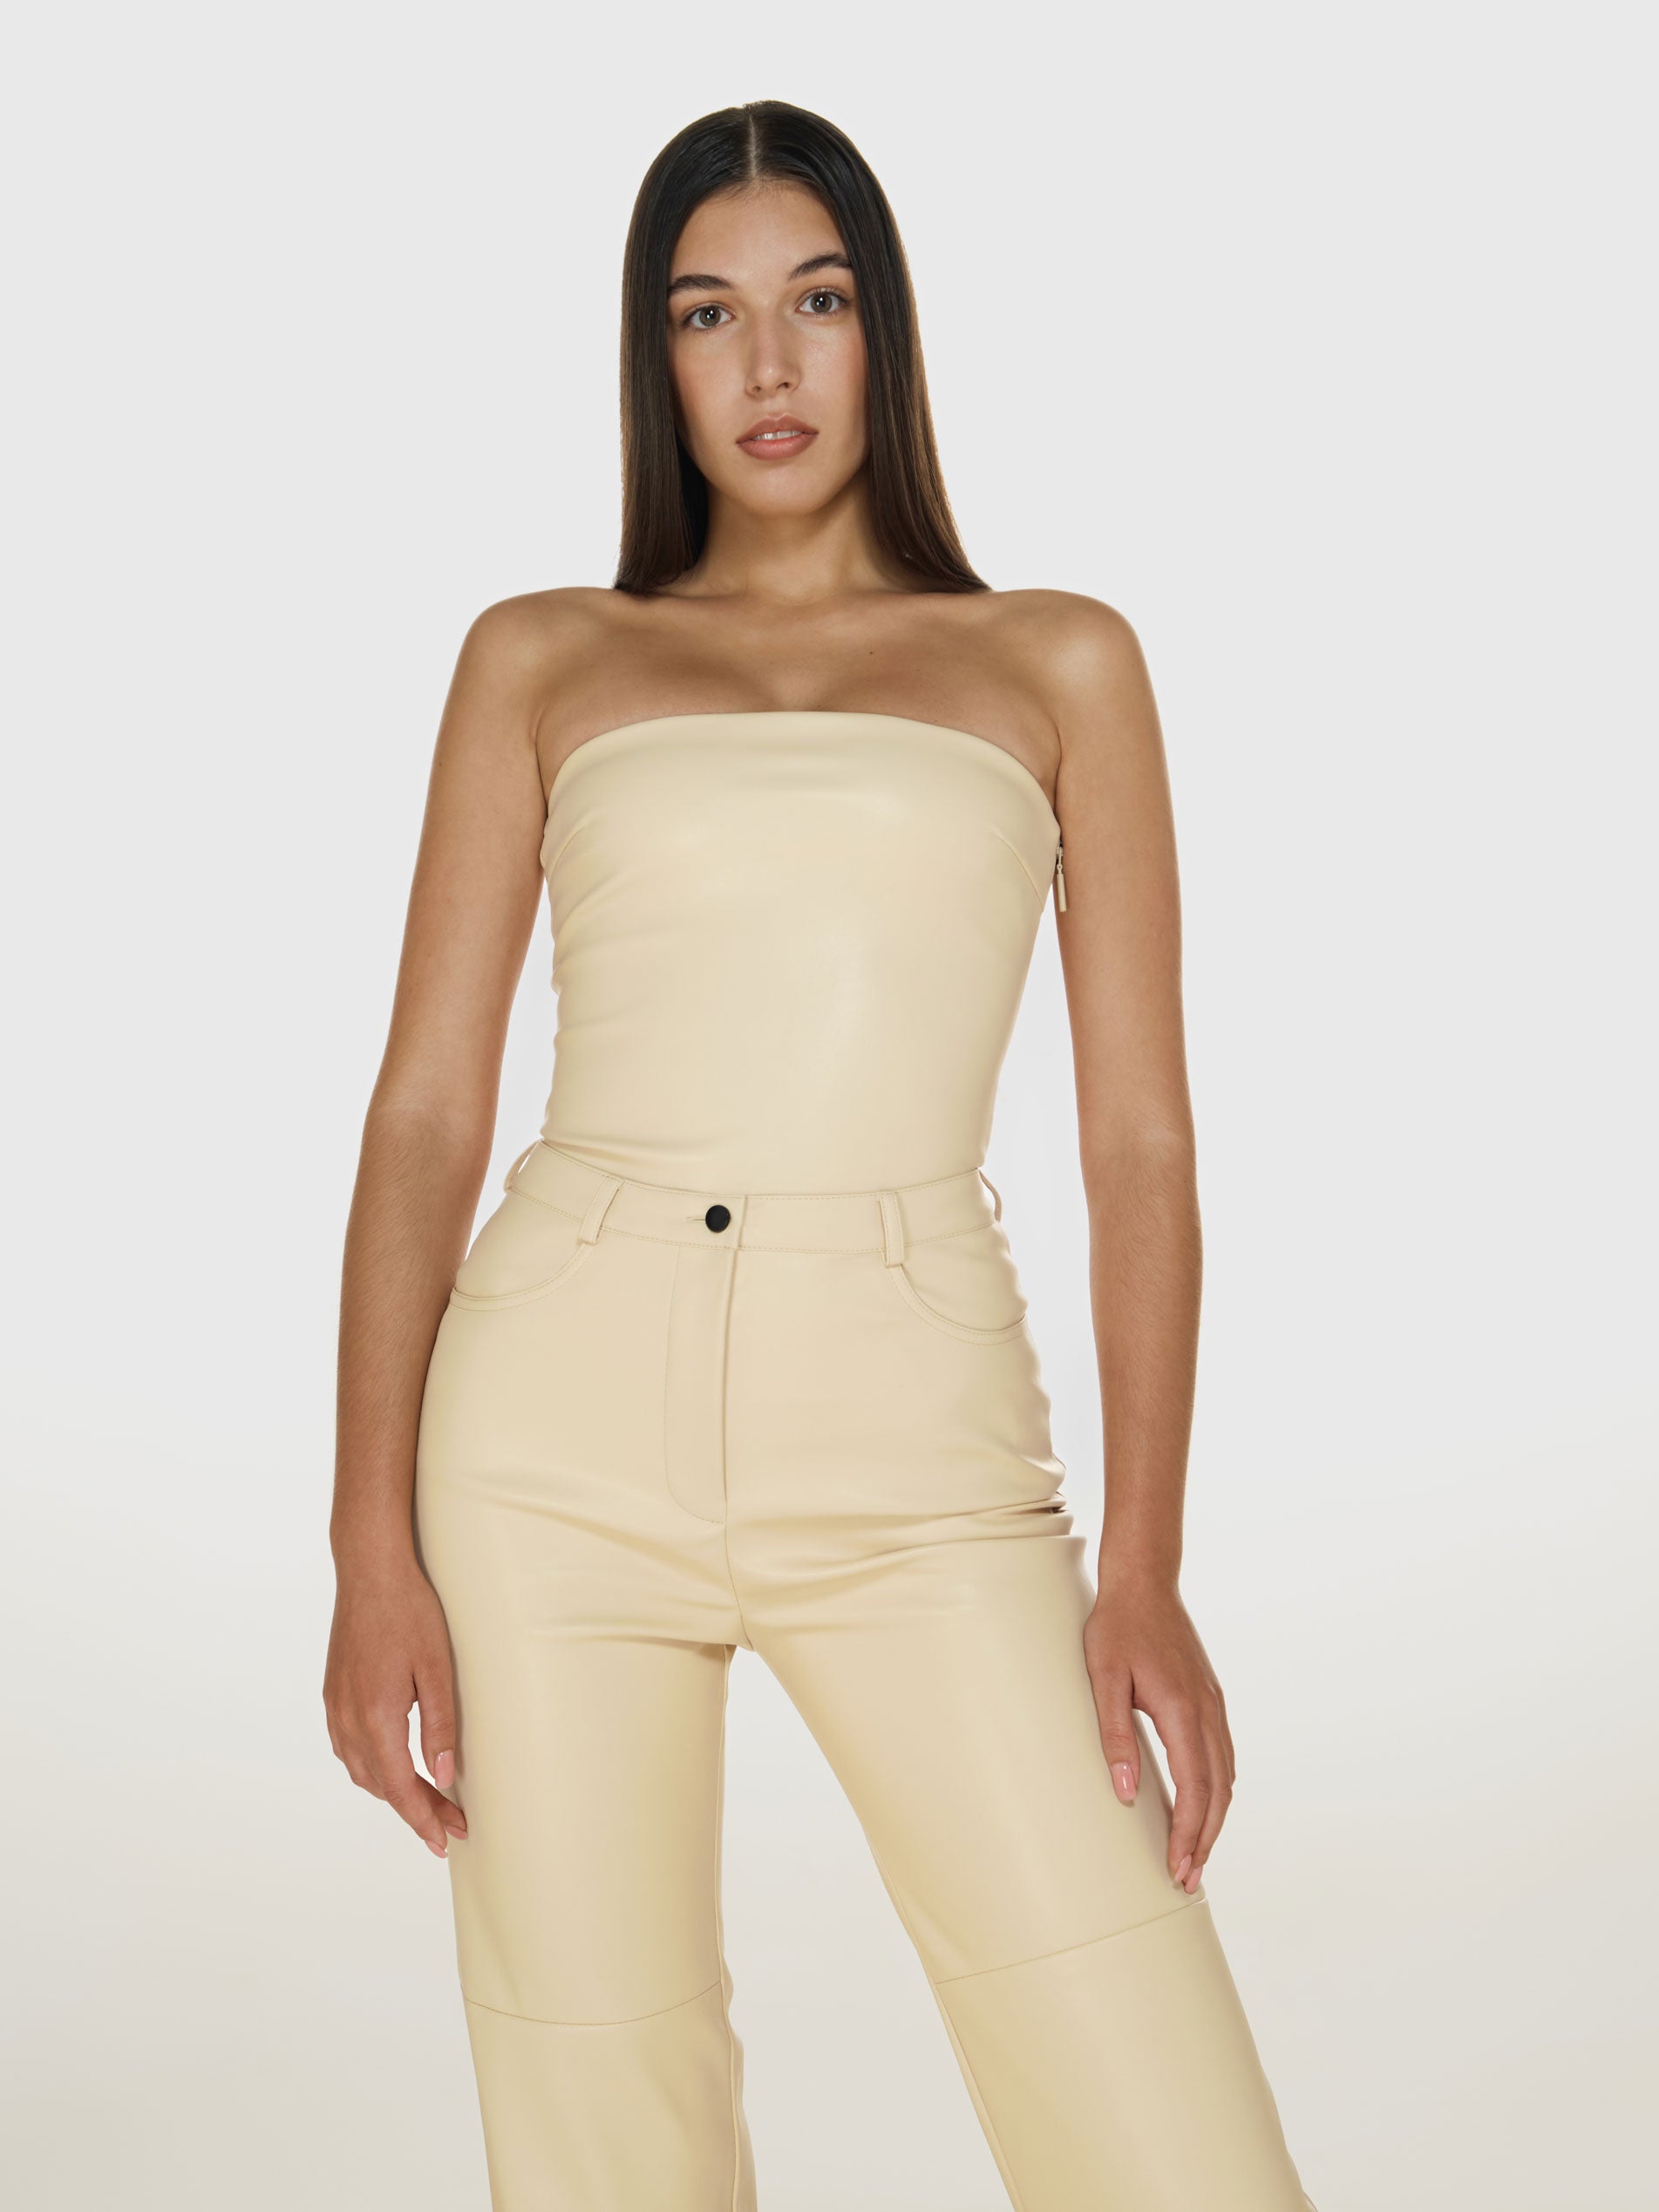 Medium full shot of a girl in a cream vegan leather tube top and cream vegan leather high rise straight leg pants